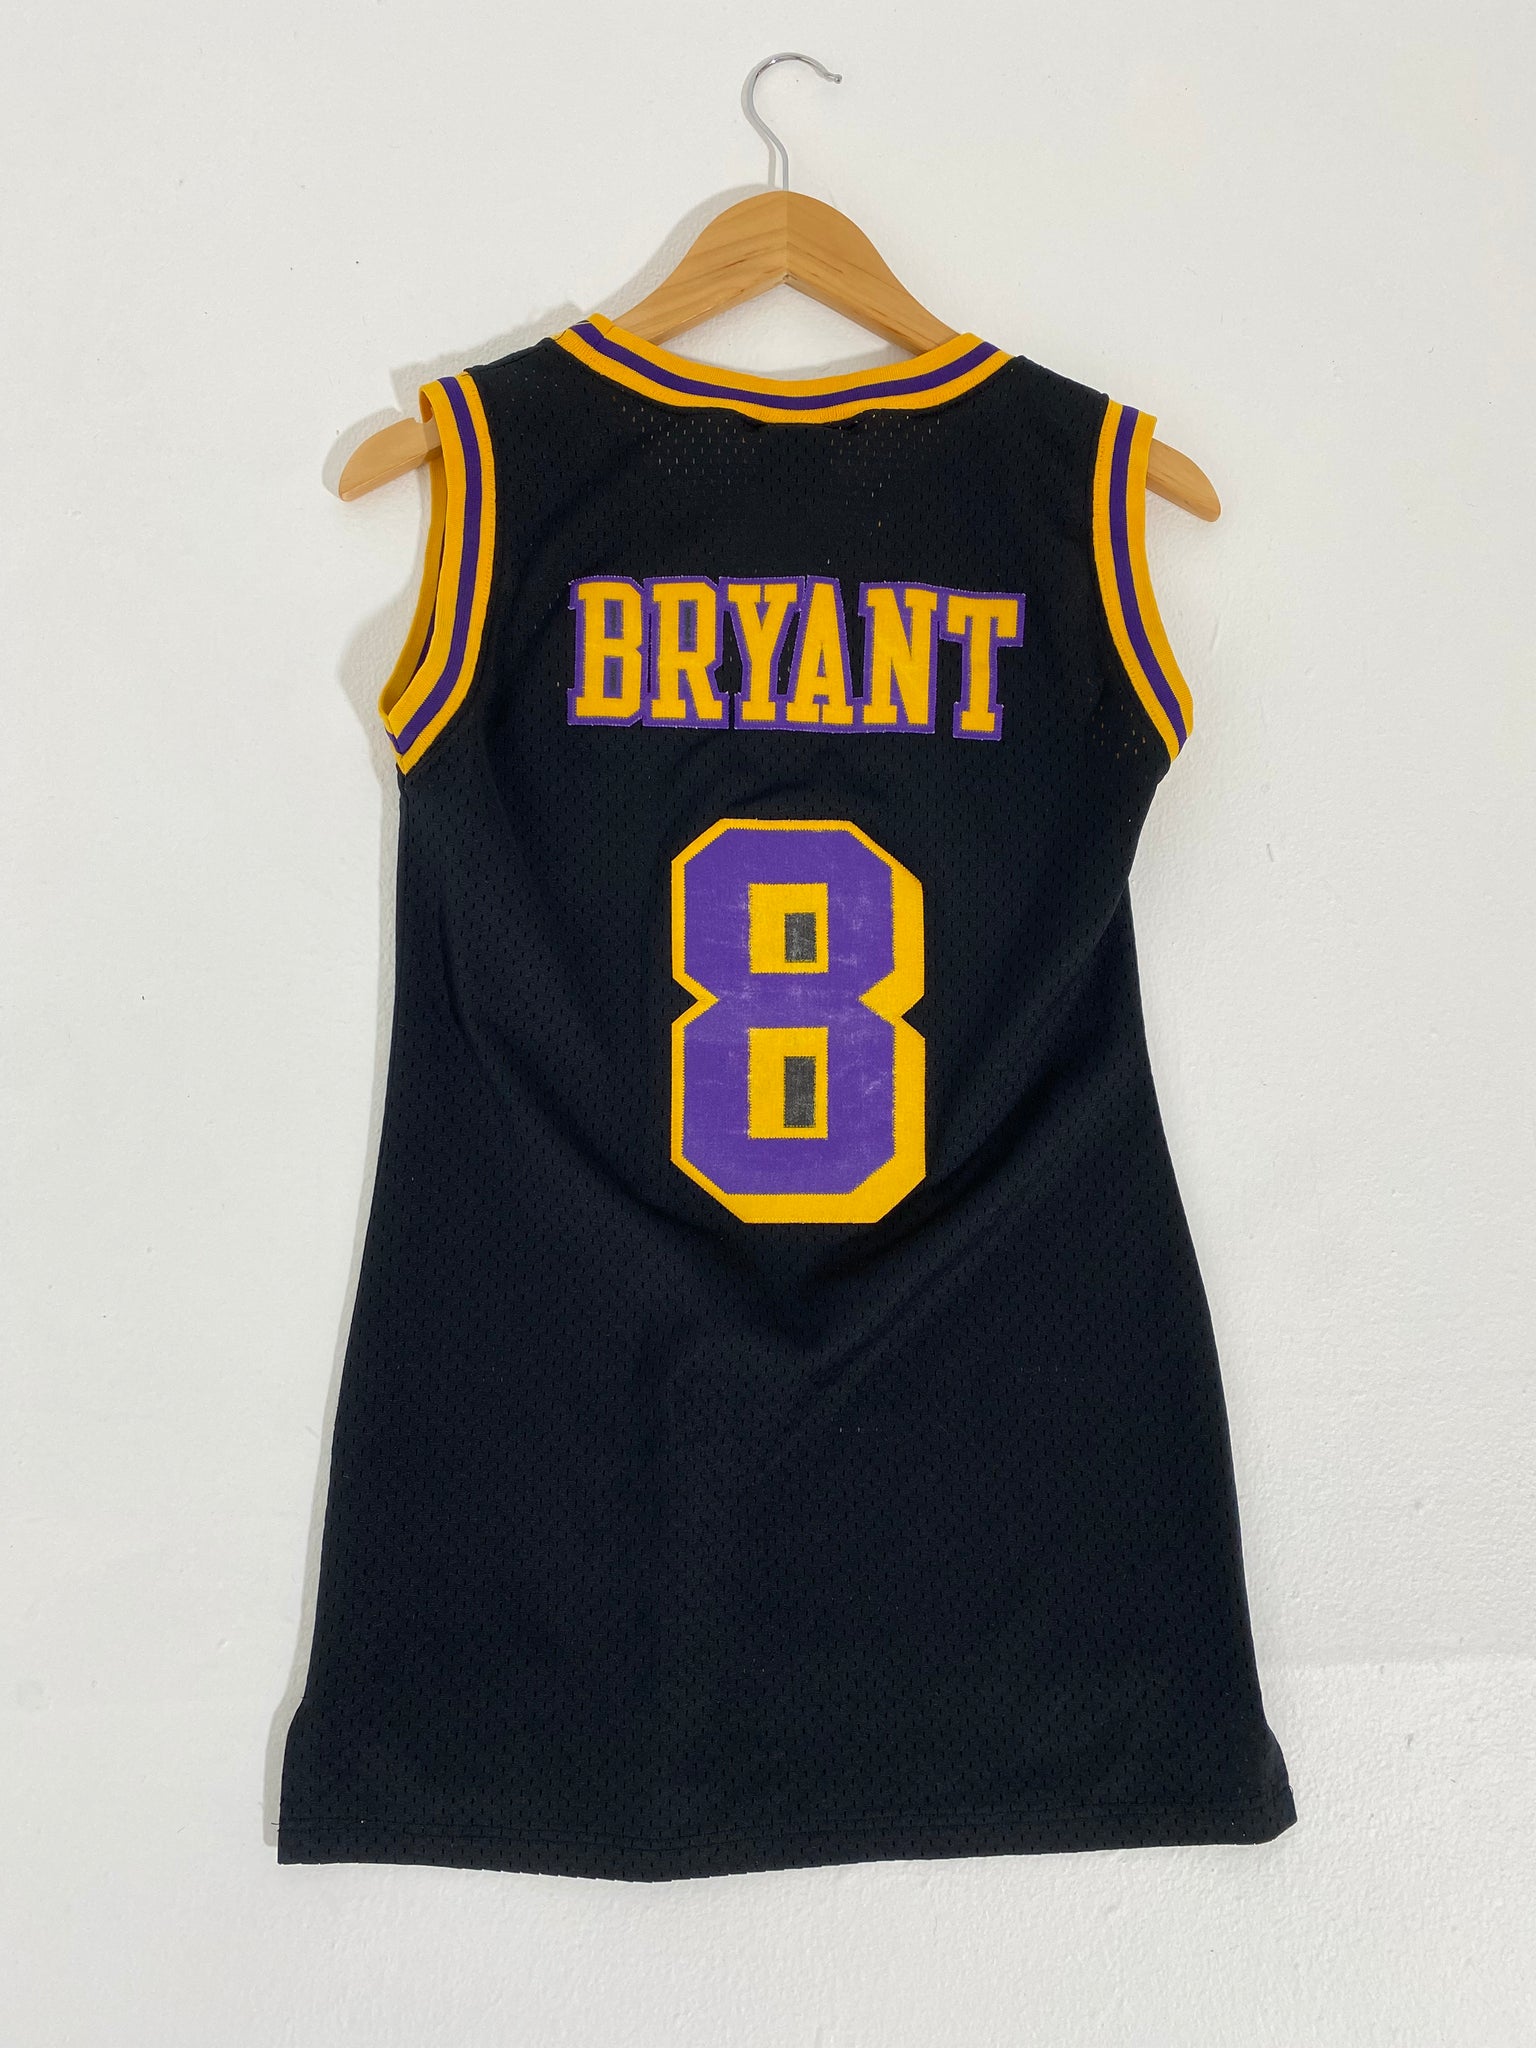 Kobe Bryant Jerseys, Gear, Apparel  Kobe bryant sneakers, La lakers jersey,  Kobe bryant